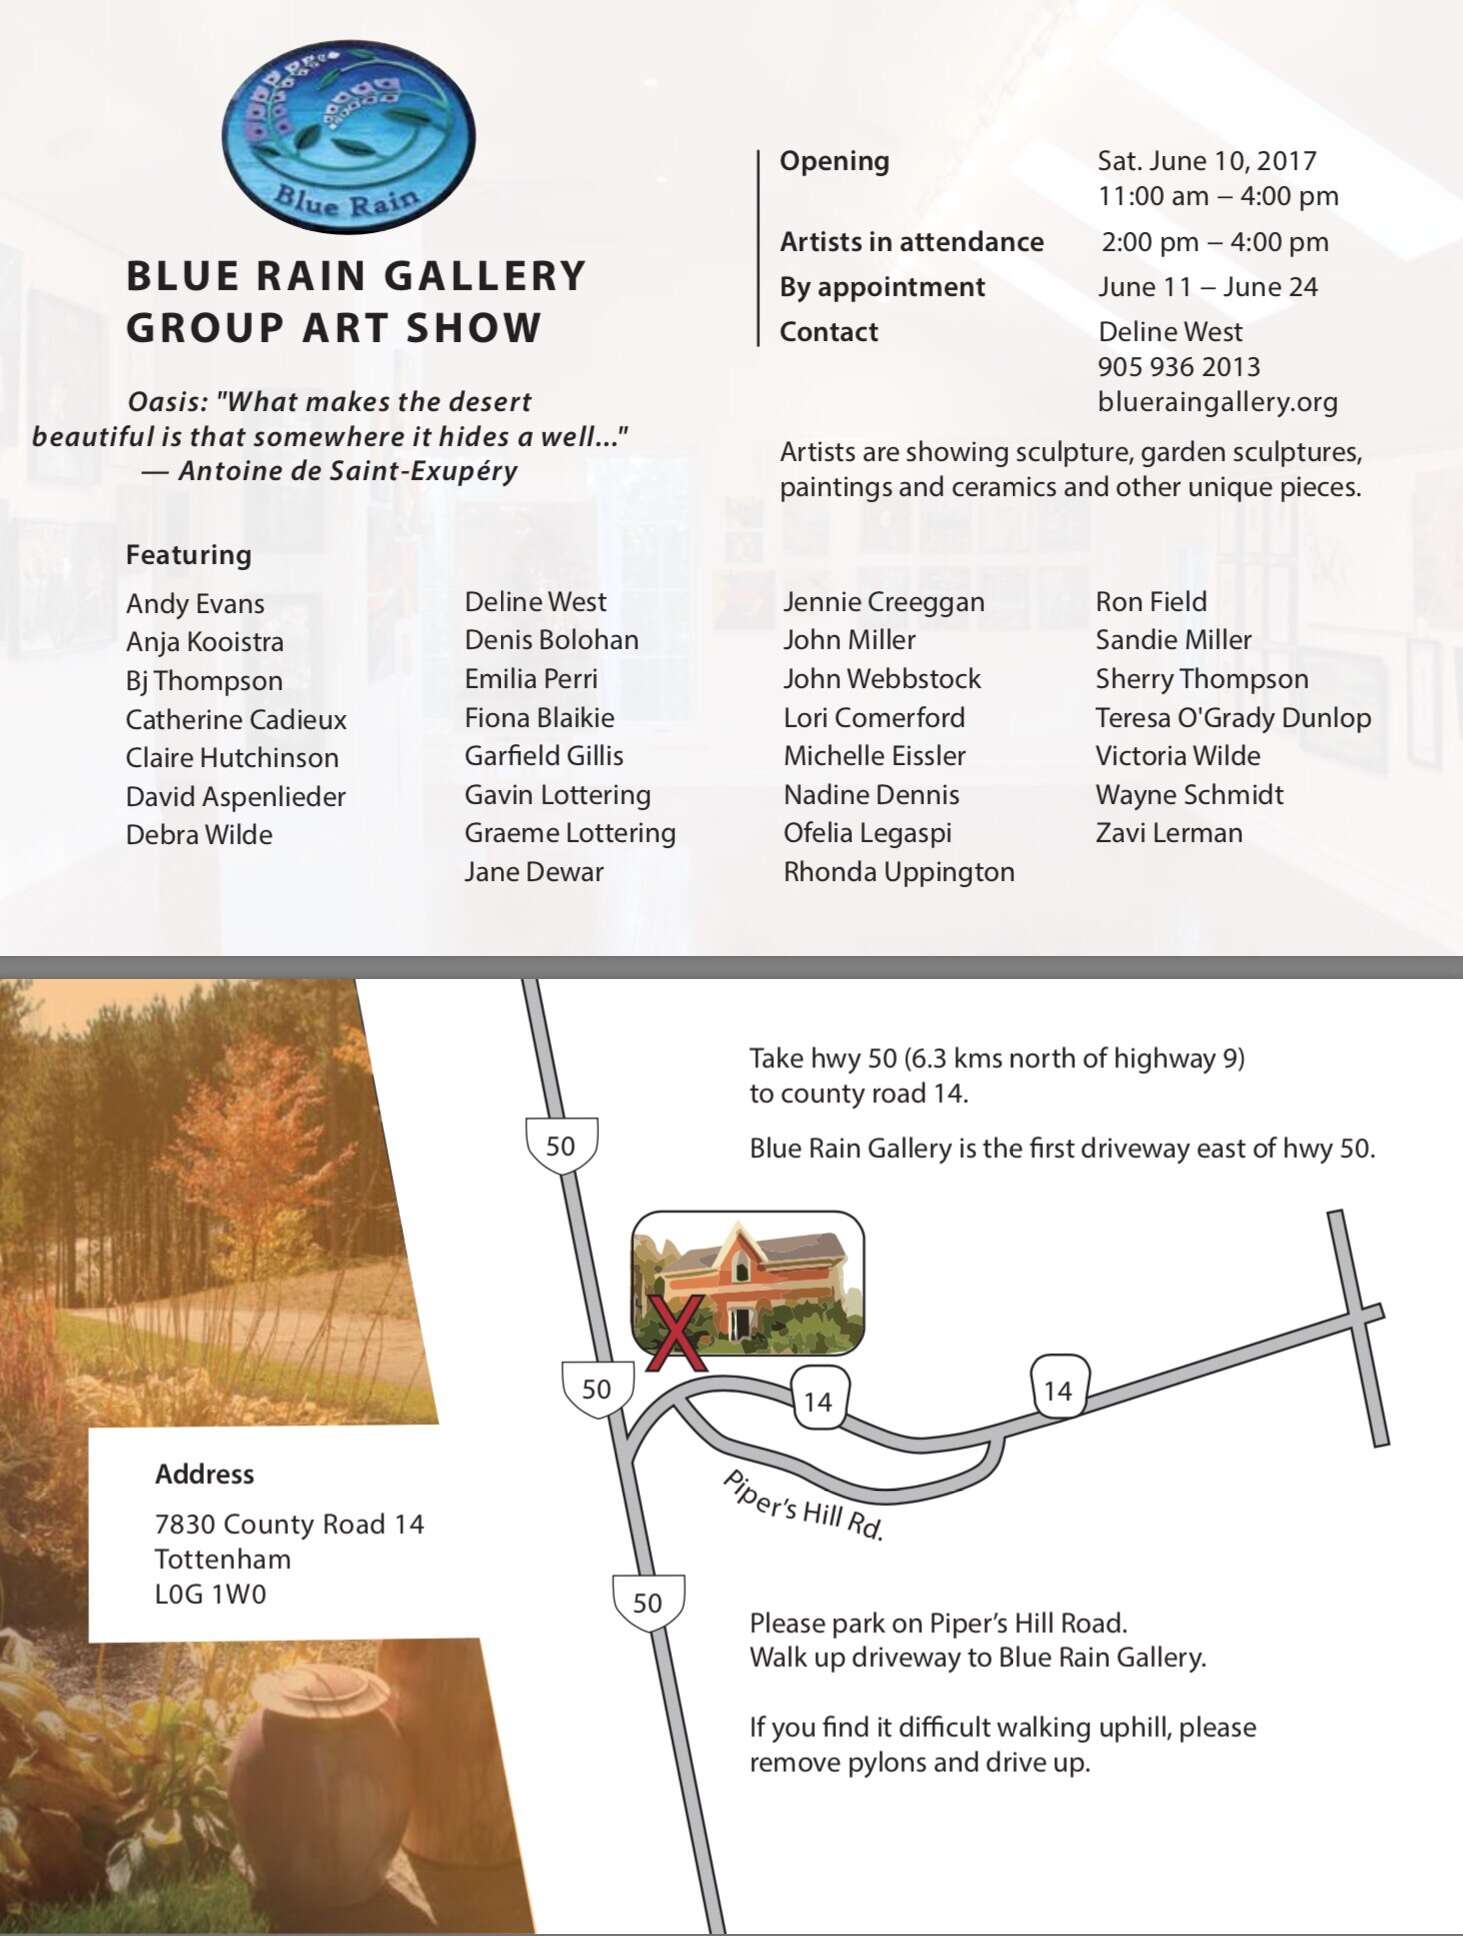 BLUE RAIN GALLERY GROUP ART SHOW ~ Opening Saturday, June 10th